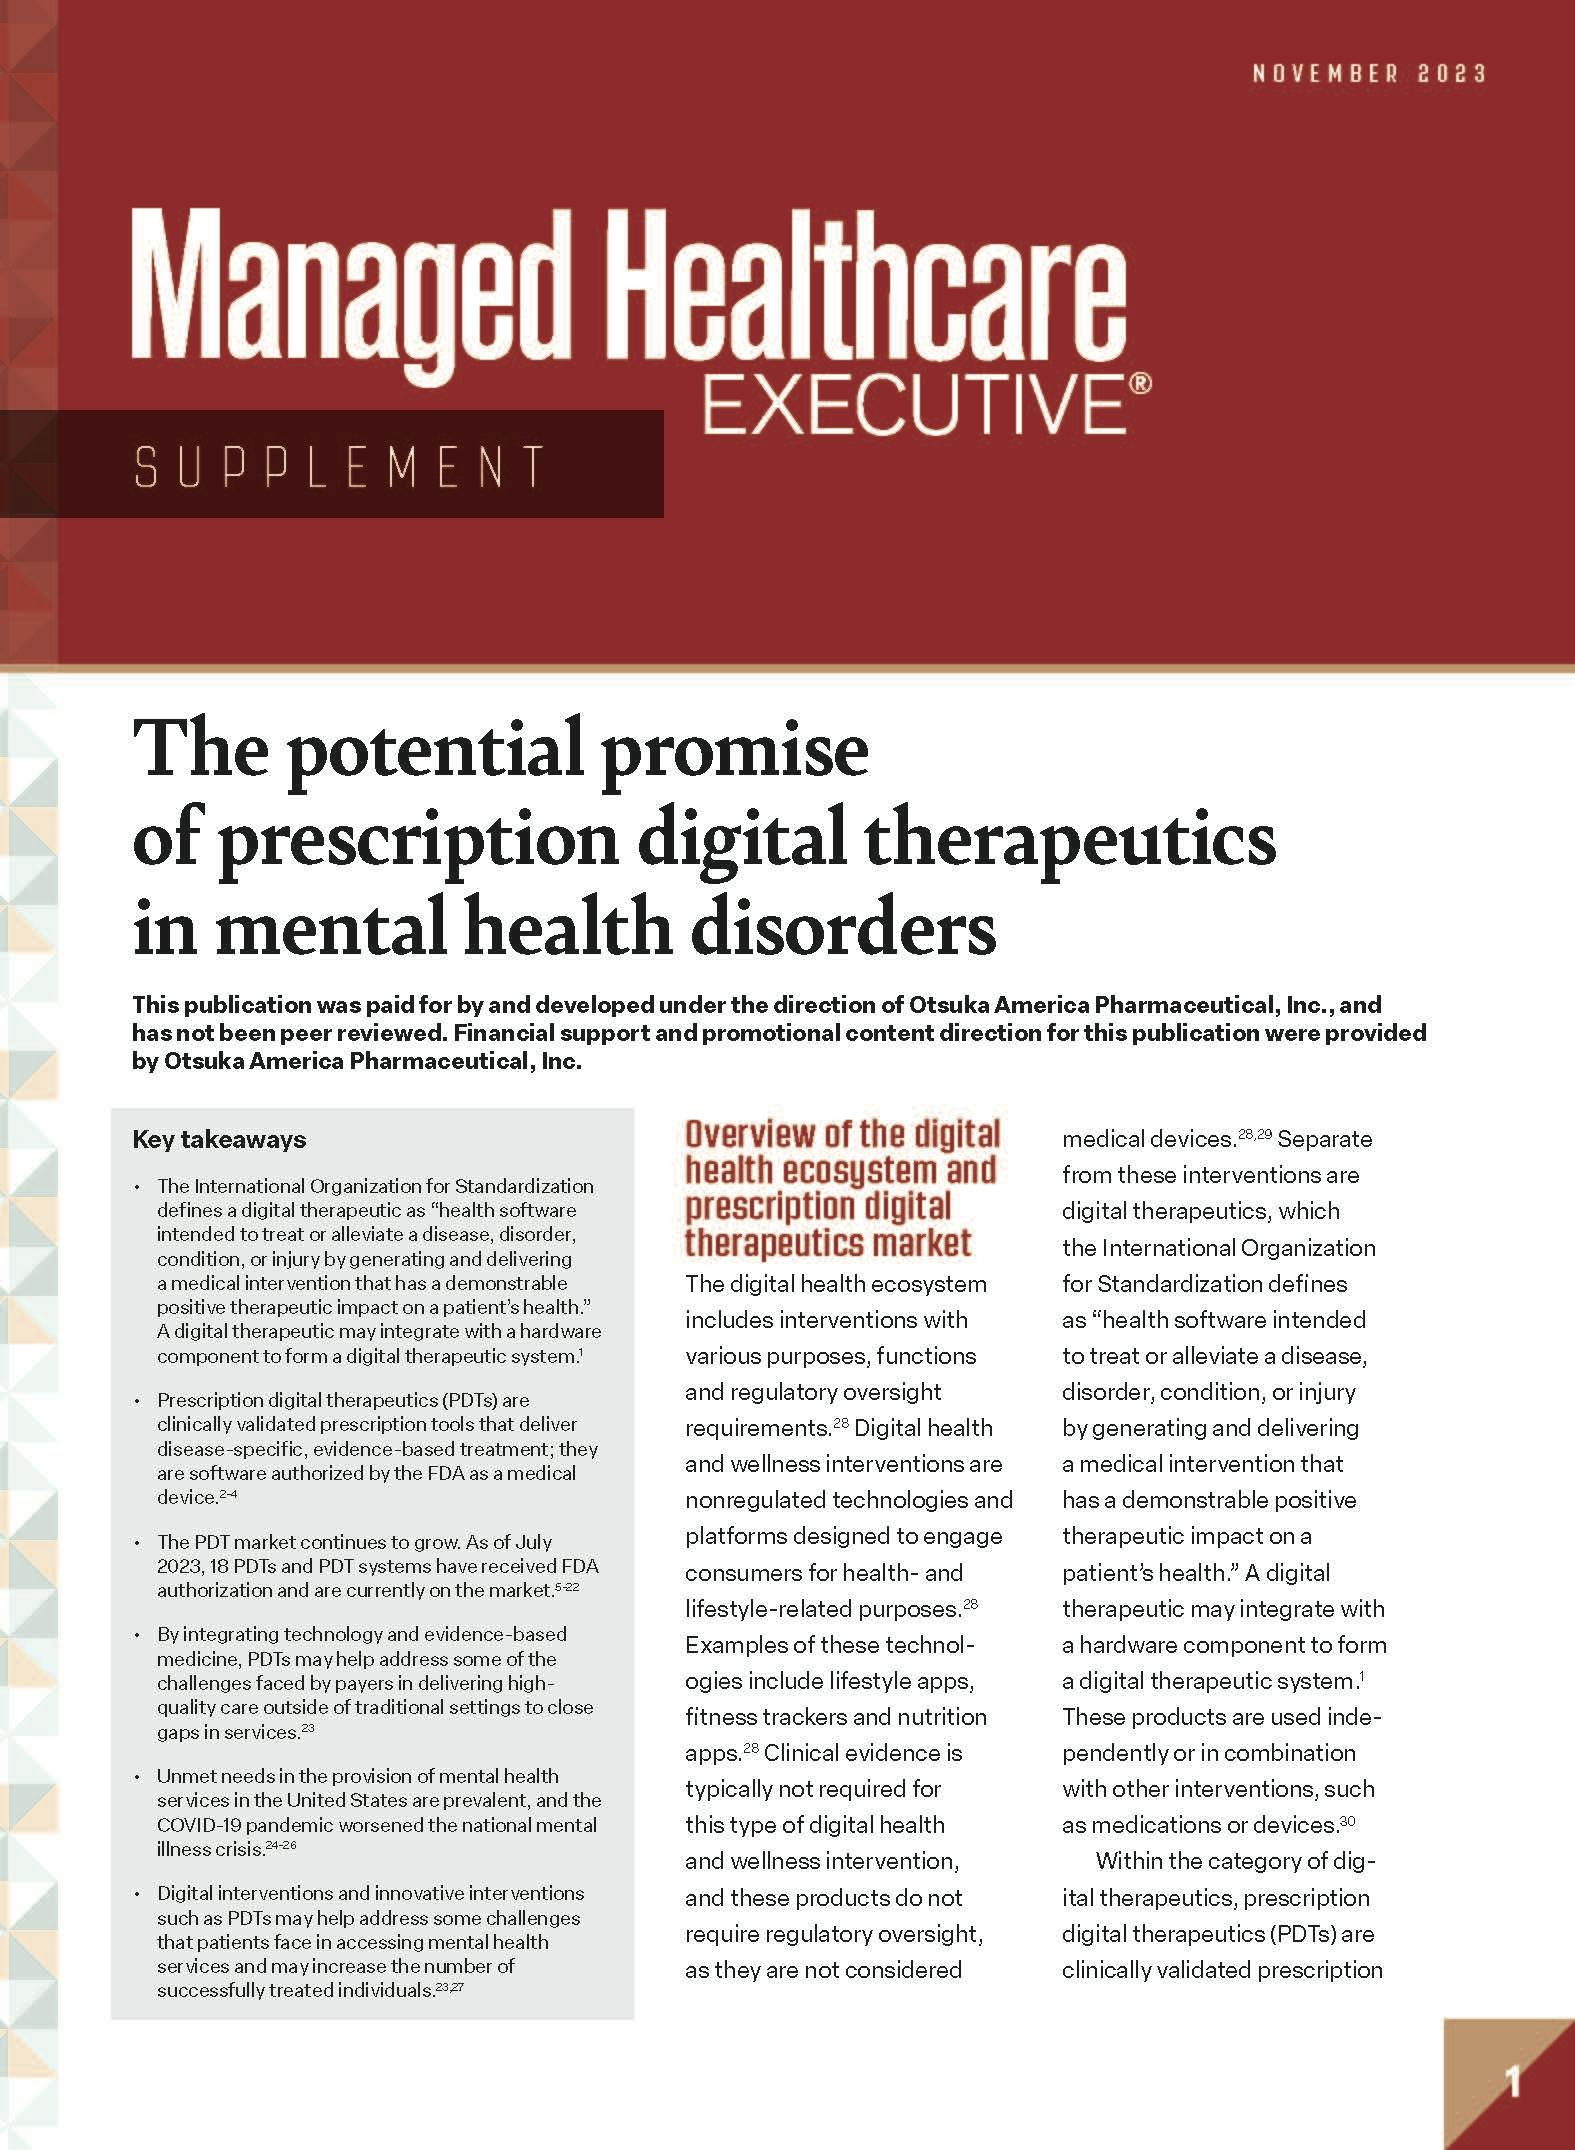 The potential promise of prescription digital therapeutics in mental health disorders